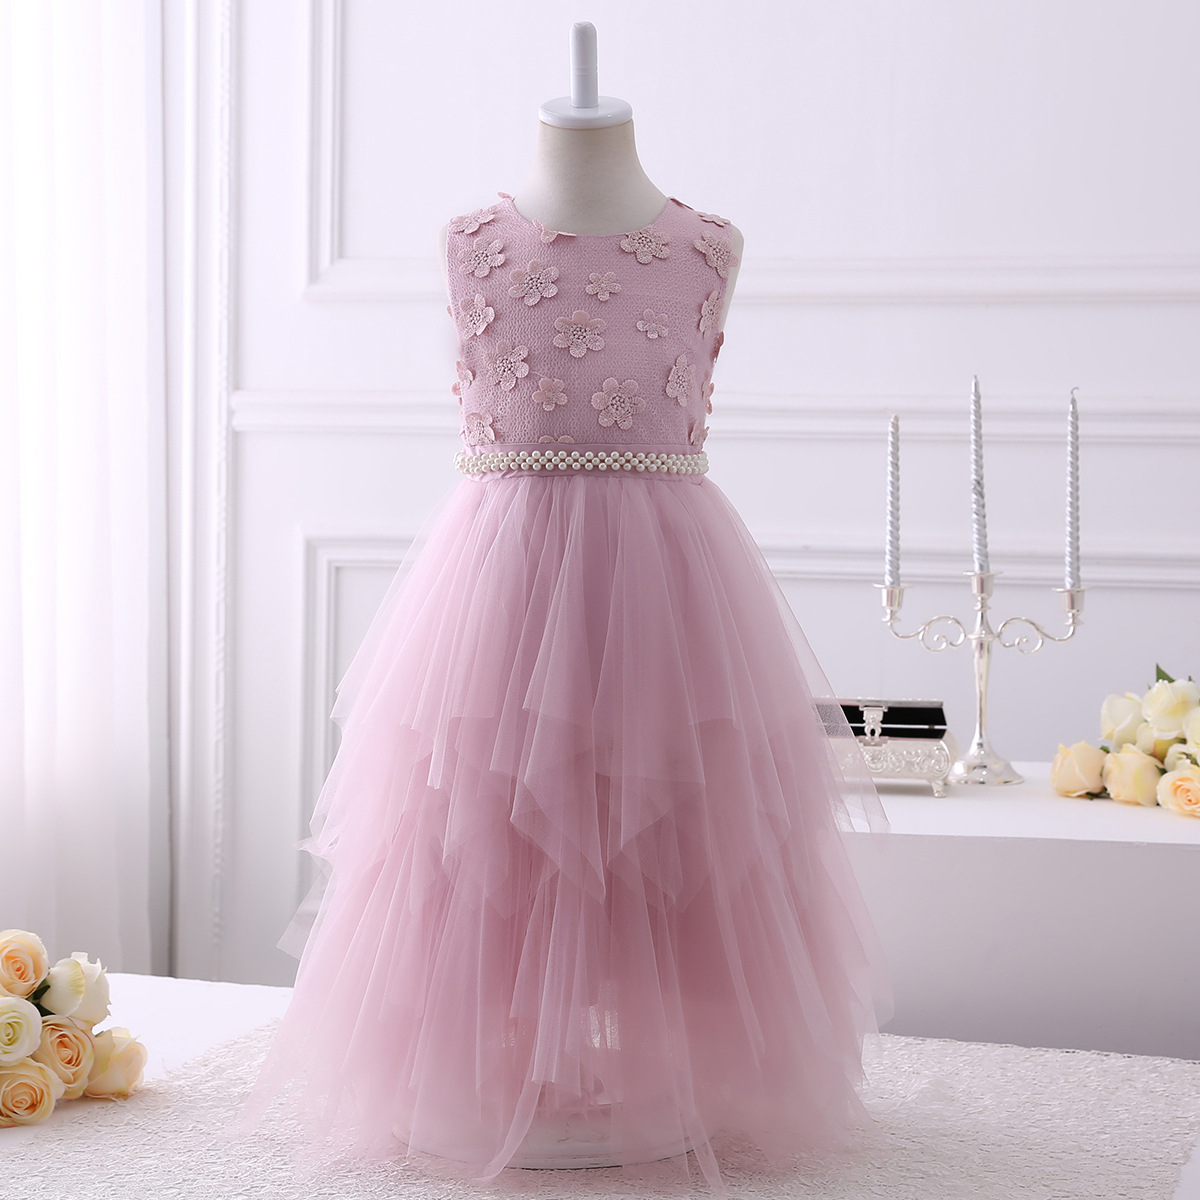 Blush Pink Flower Girl Dresses,lace Applique Flower Girl Dresses,girls Dresses 2018